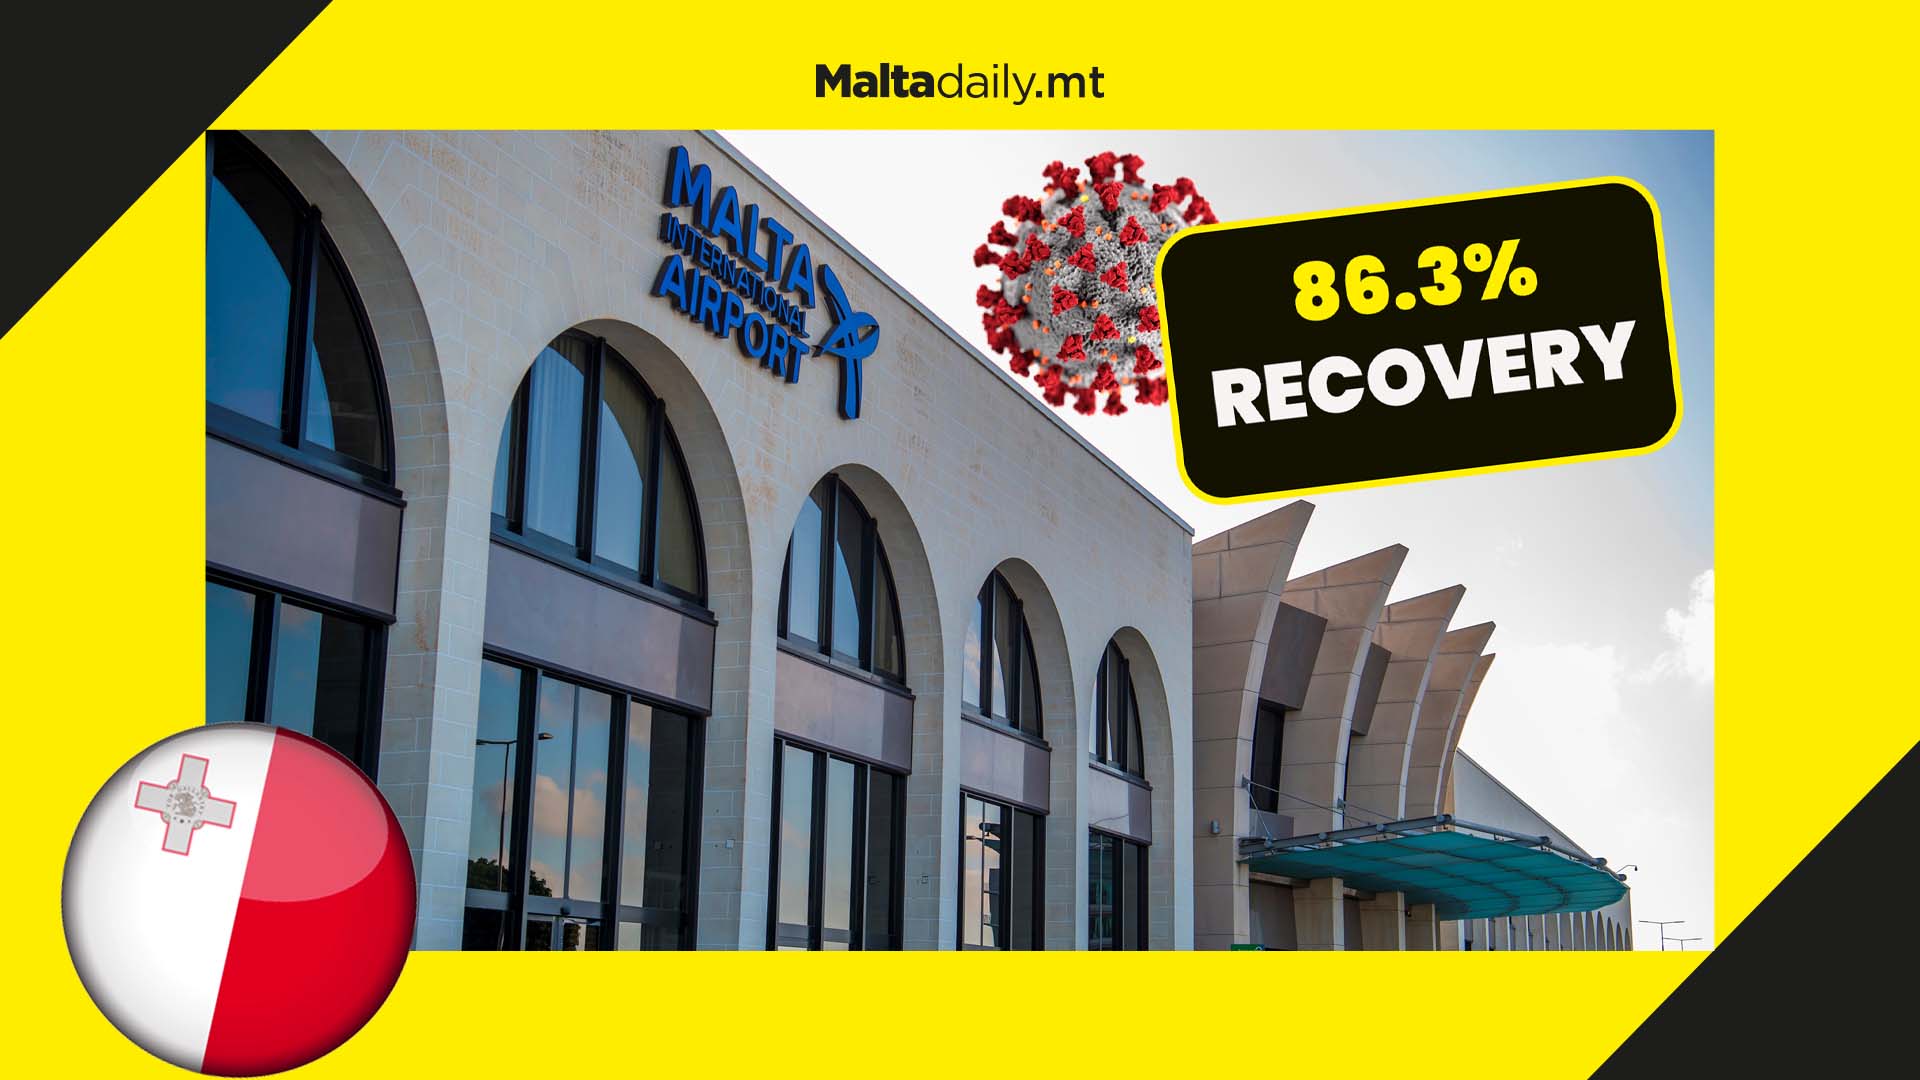 Malta airport regains 86.3% pre-pandemic traffic in July